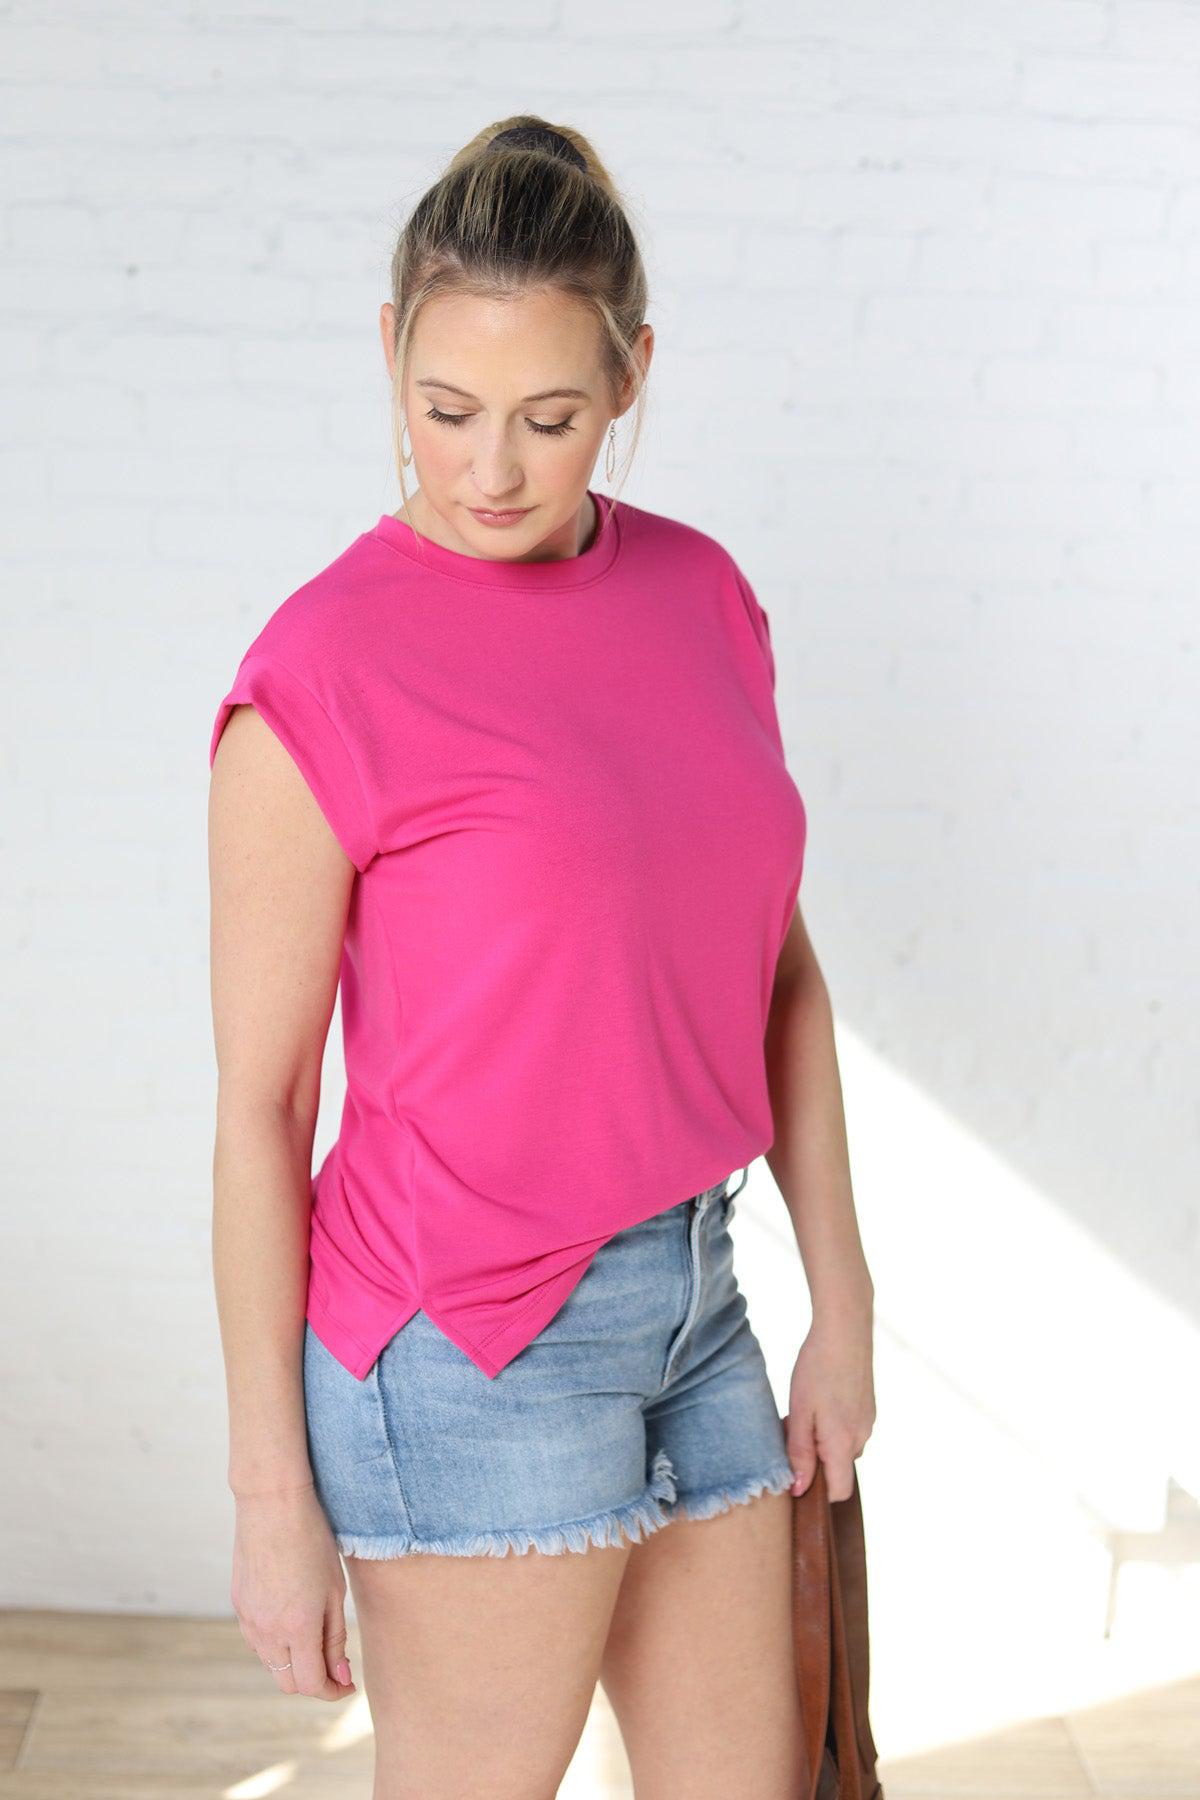 Amelia Short Sleeve Top - Hot Pink